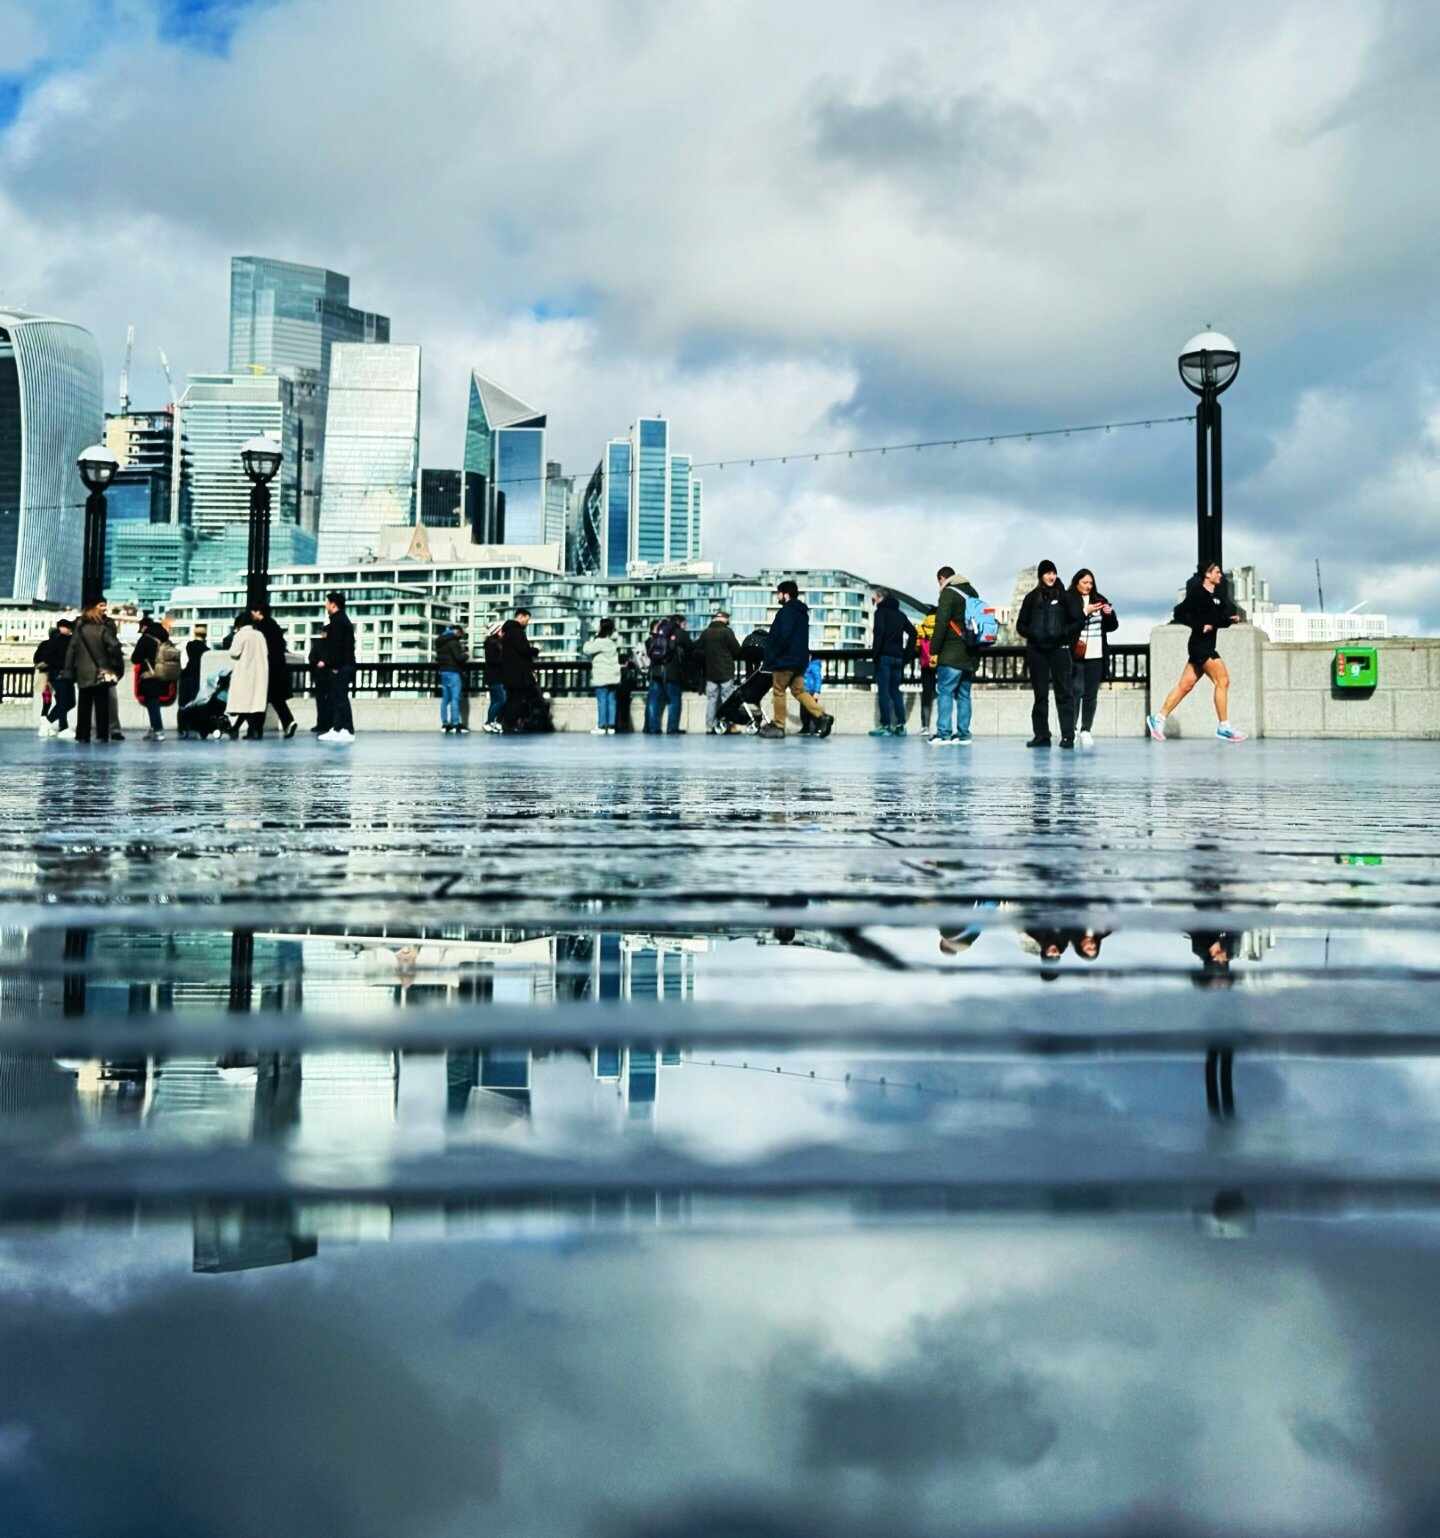 London life #reflections #towerbridgelondon #londonlife #puddles #saturdayinlondon #londonbridge